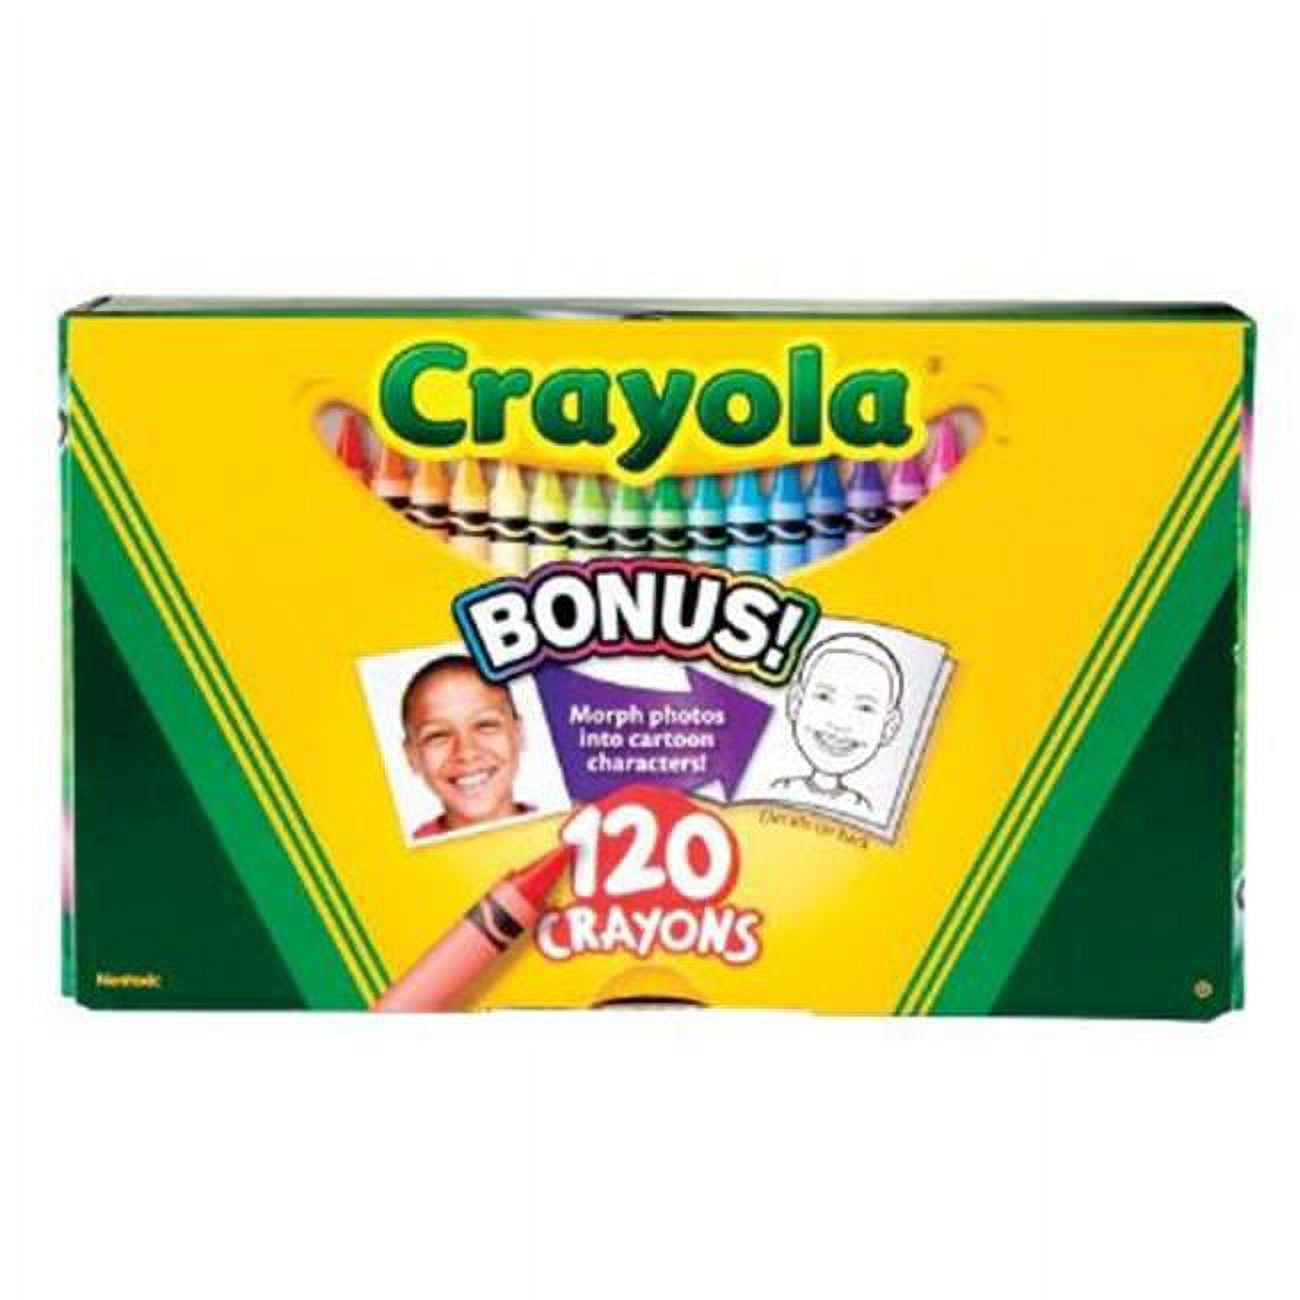 Crayola Scribble Scrubbie Pets Backyard Bungalow, School Supplies, Toys,  Unisex Child, 8 Pcs